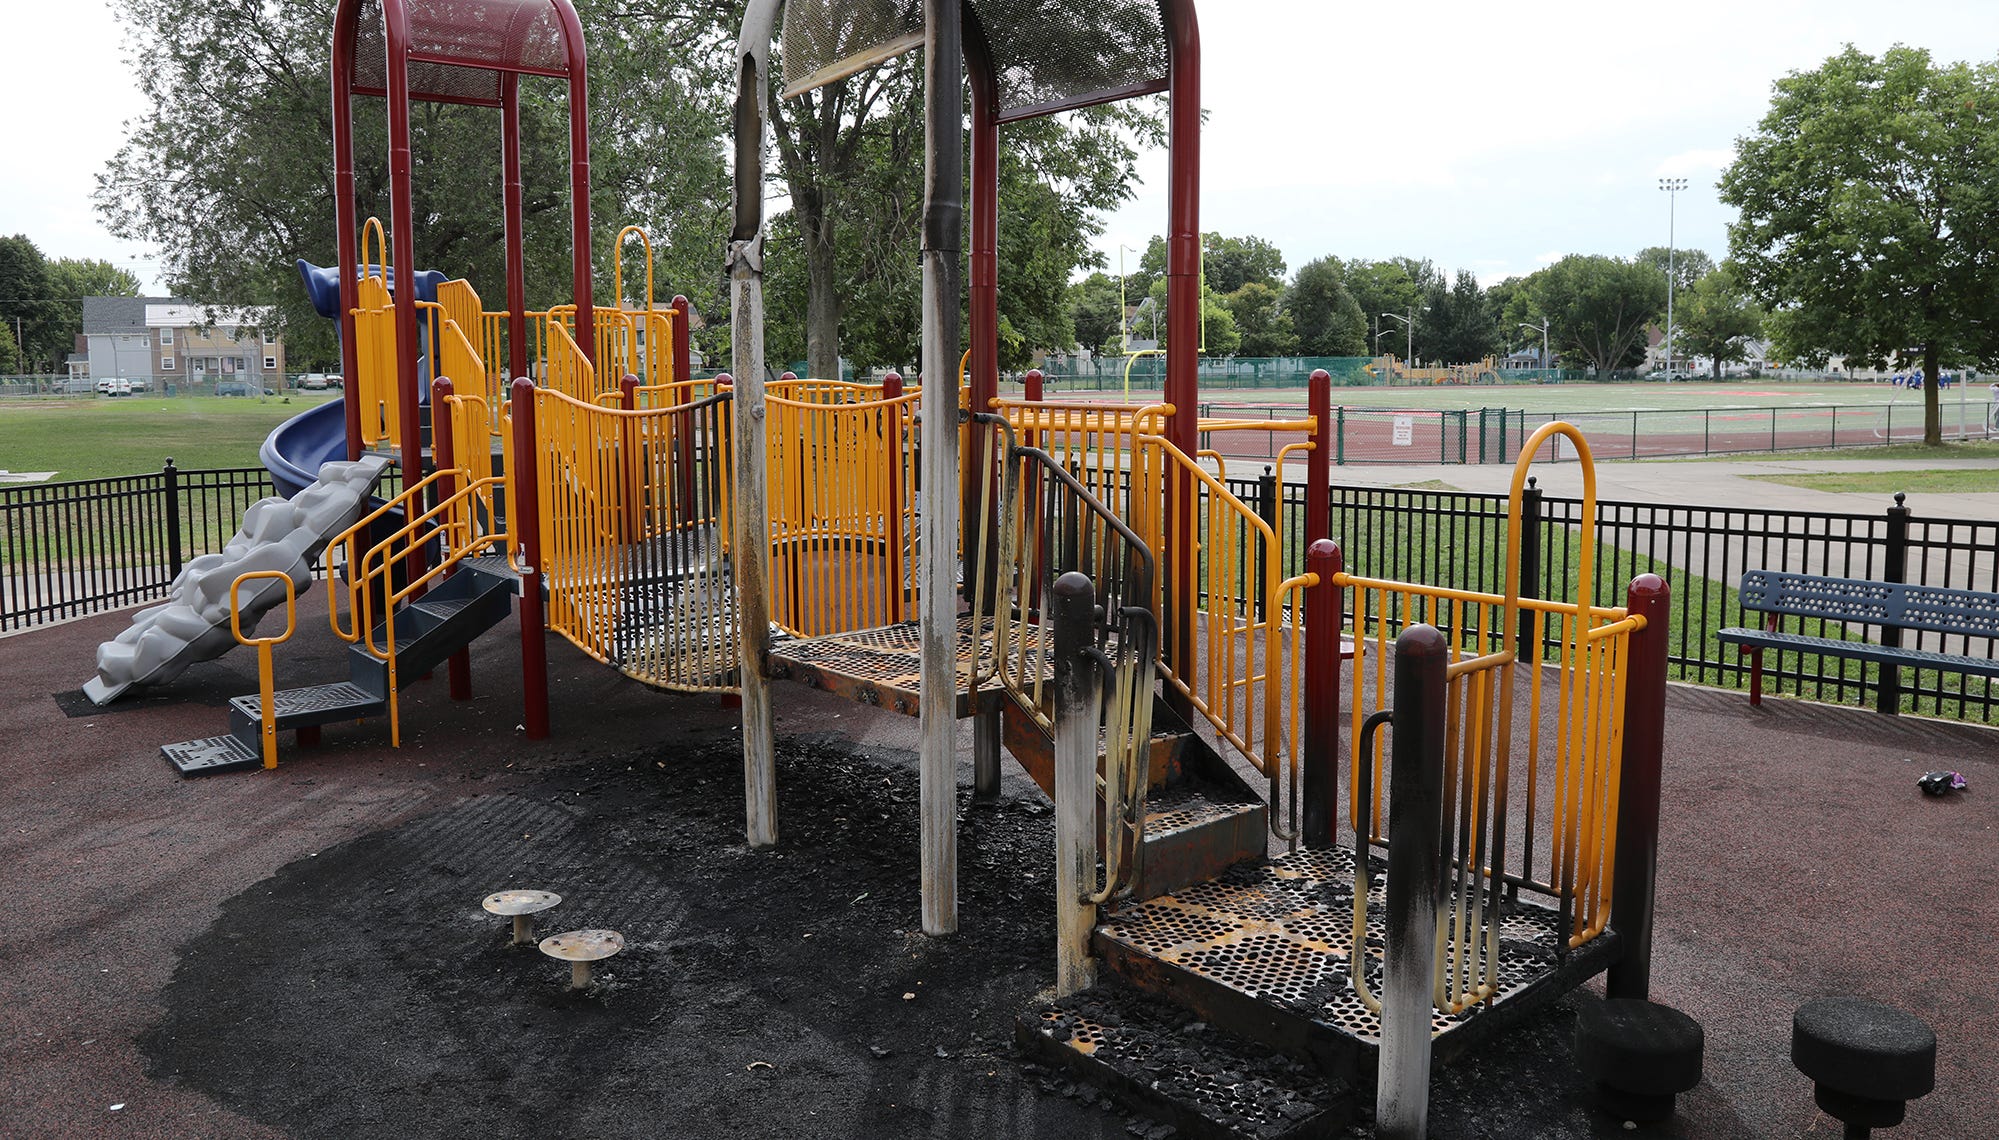 Wilson Foundation Academy playground set on fire